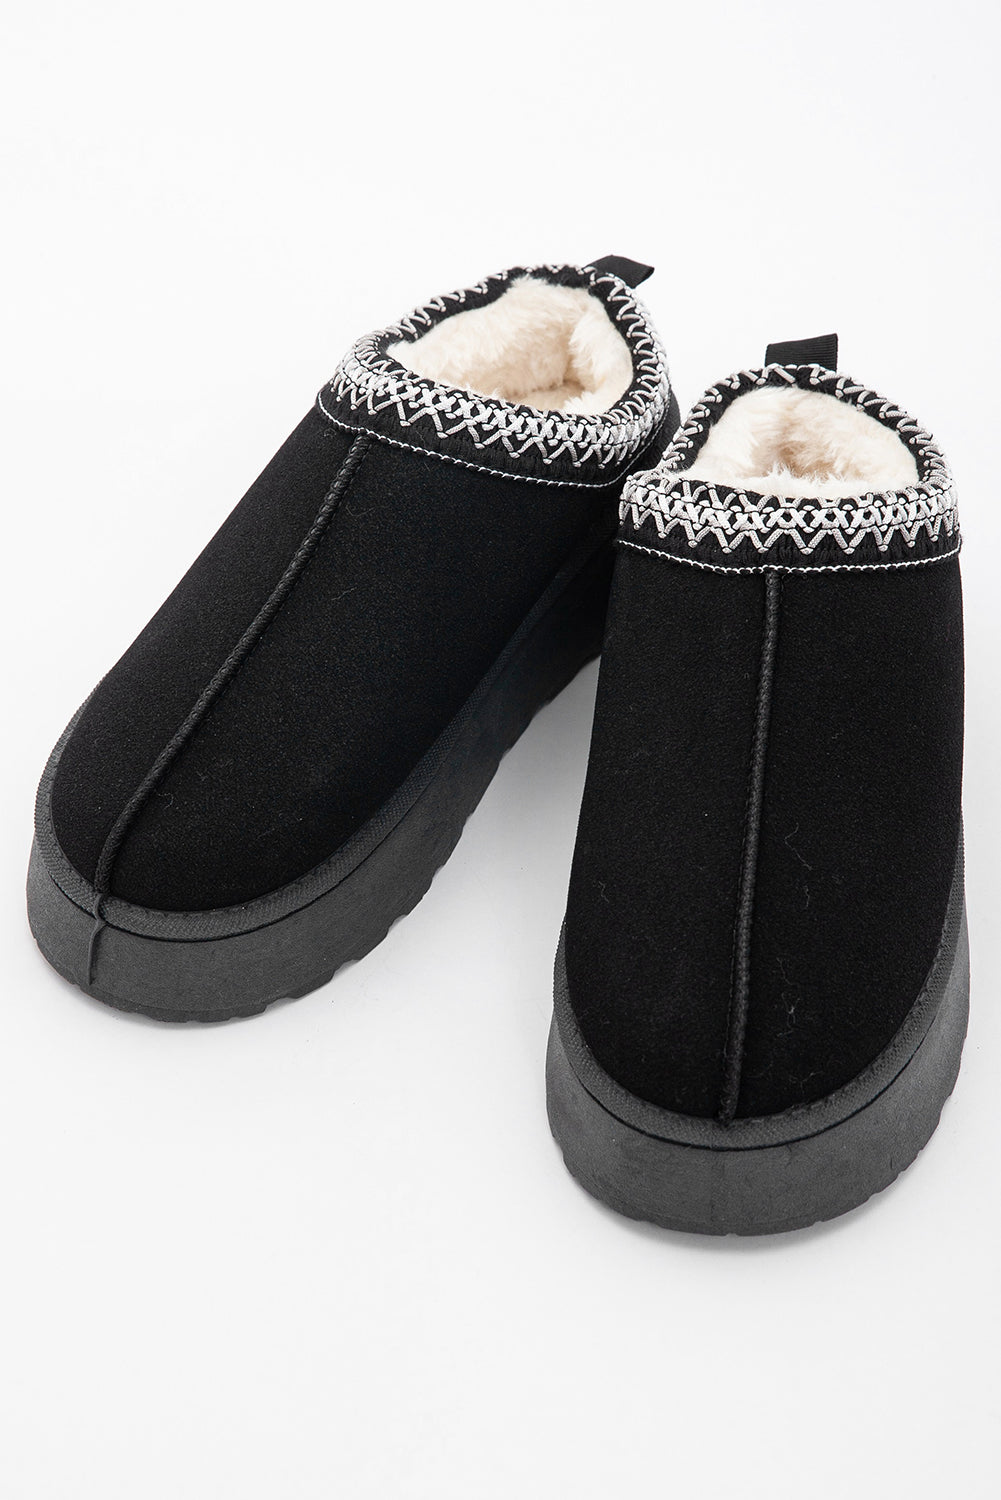 Chestnut Plush Suede Trim Thick Sole Flat Snow Boots